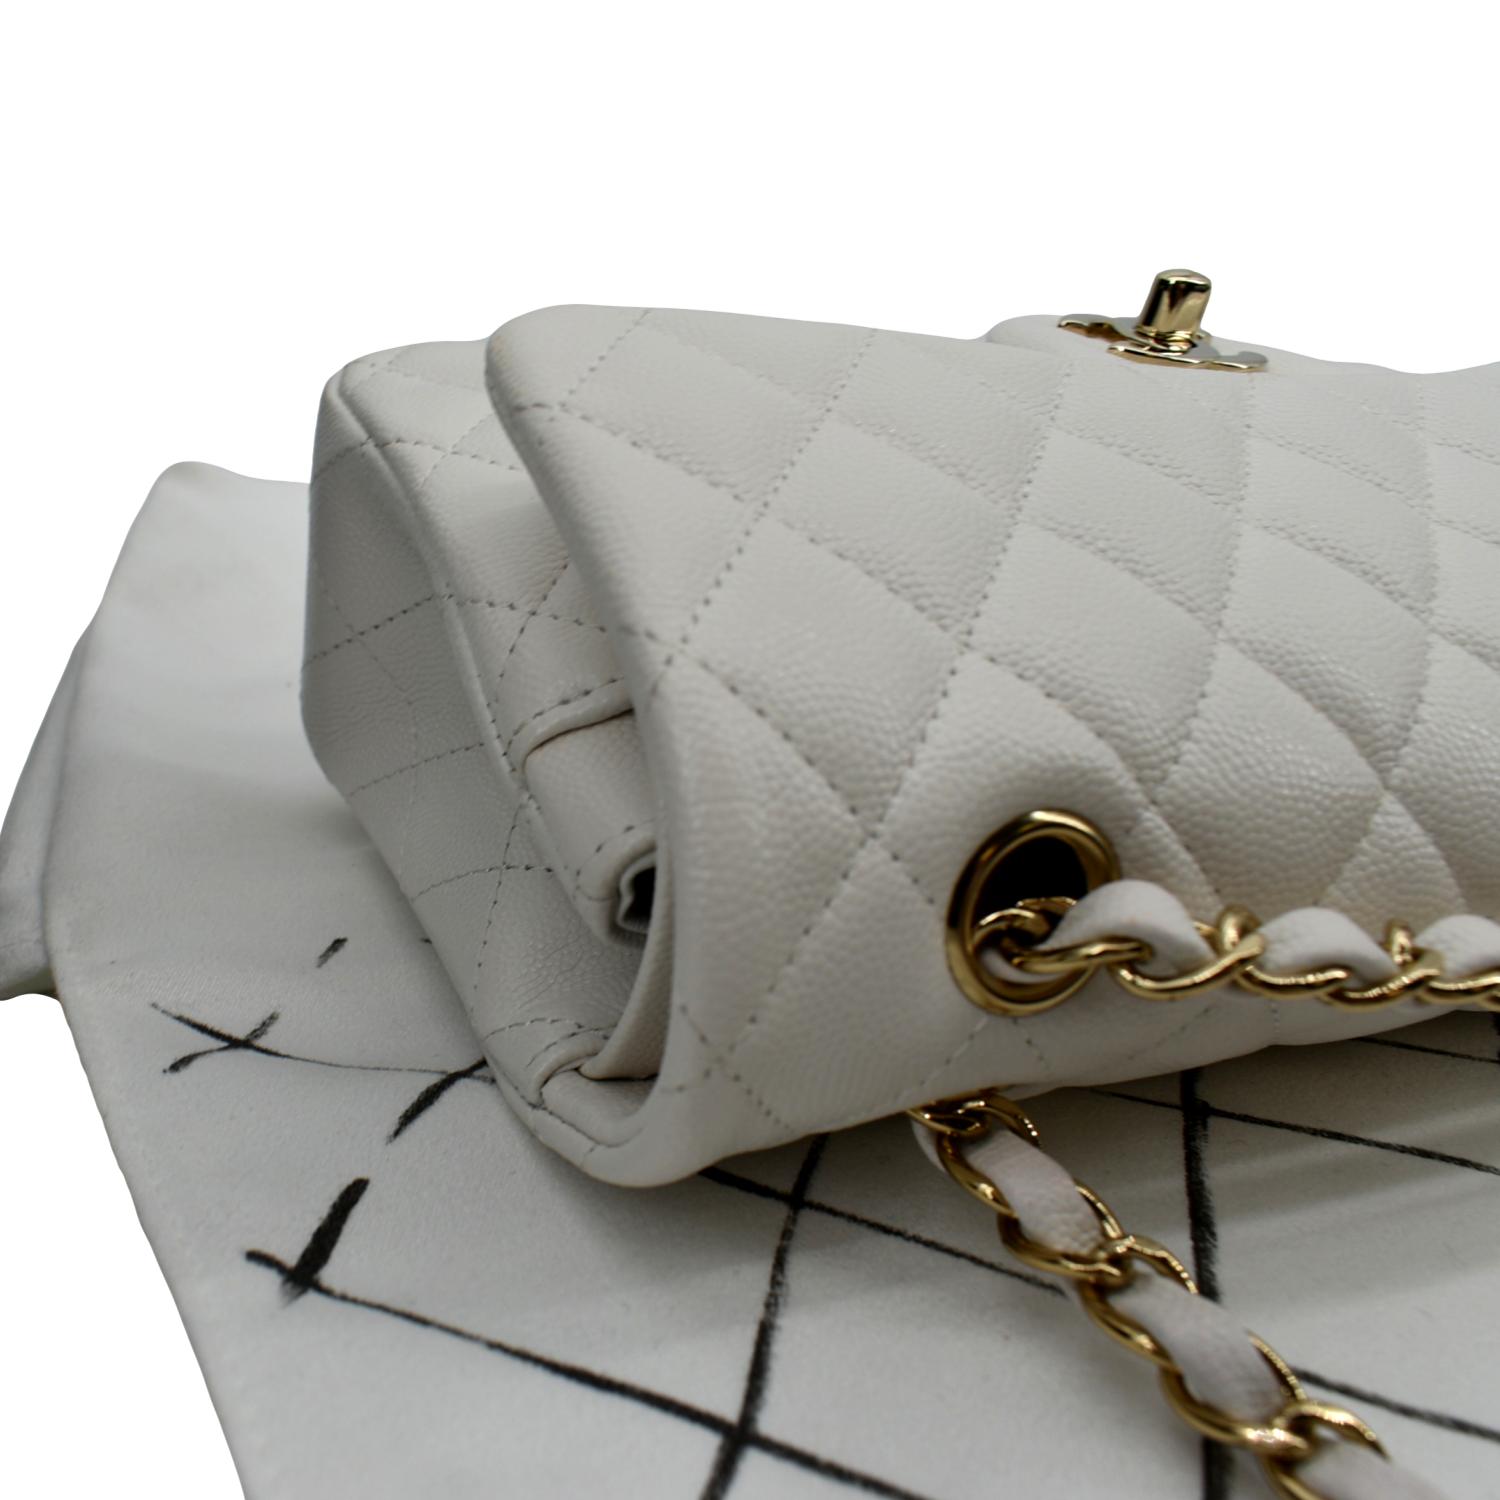 Chanel Bags, Chanel Handbags for Sale